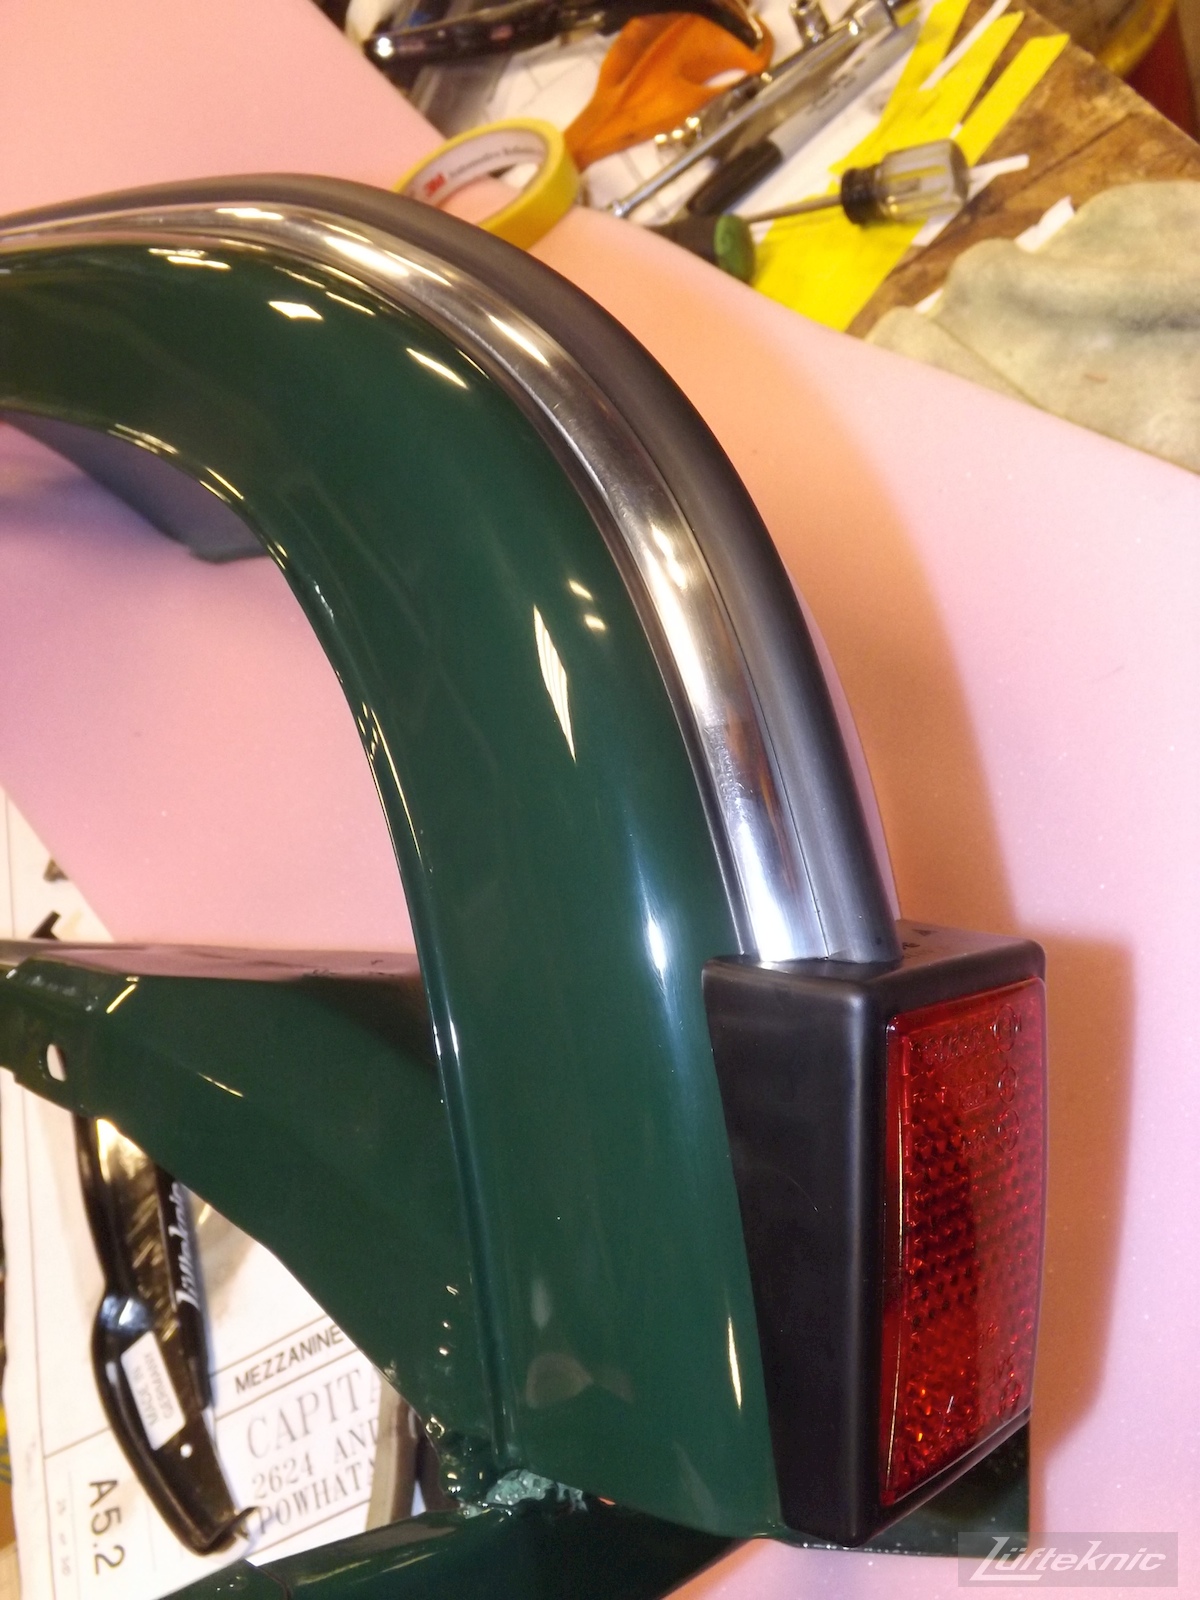 Refinished rear bumper part for an Irish Green Porsche 912 undergoing restoration at Lufteknic.